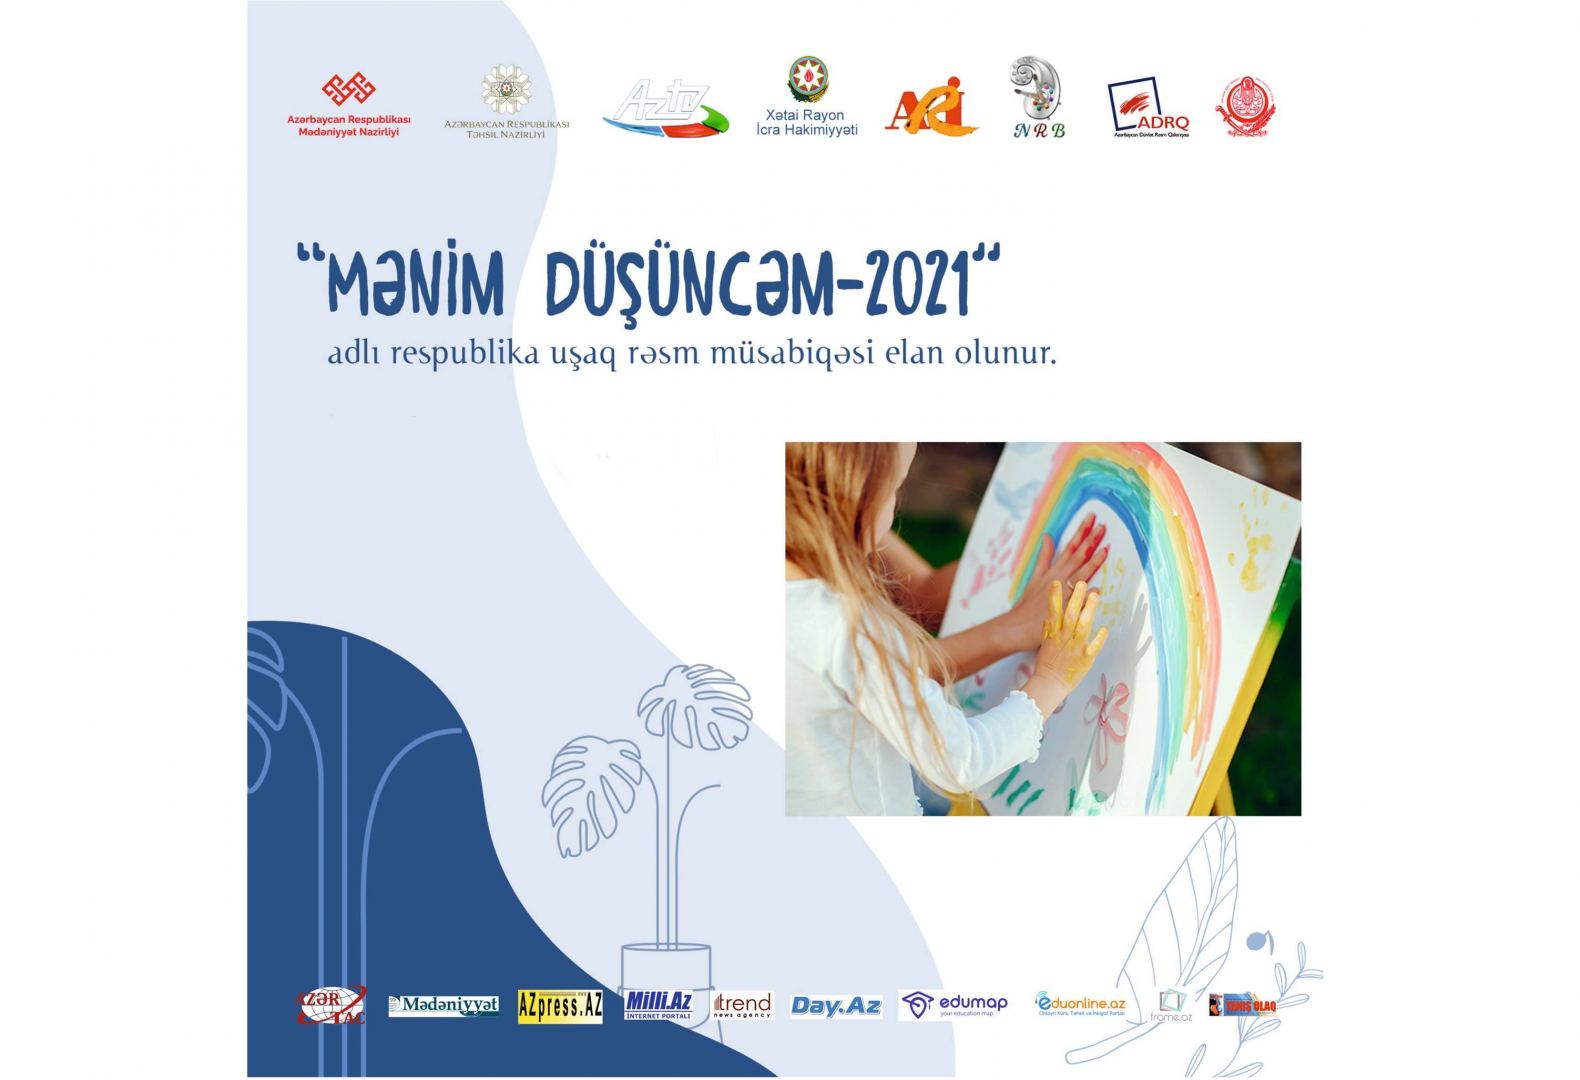 На конкурс "Mənim düşüncəm-2021" прислано более тысячи работ